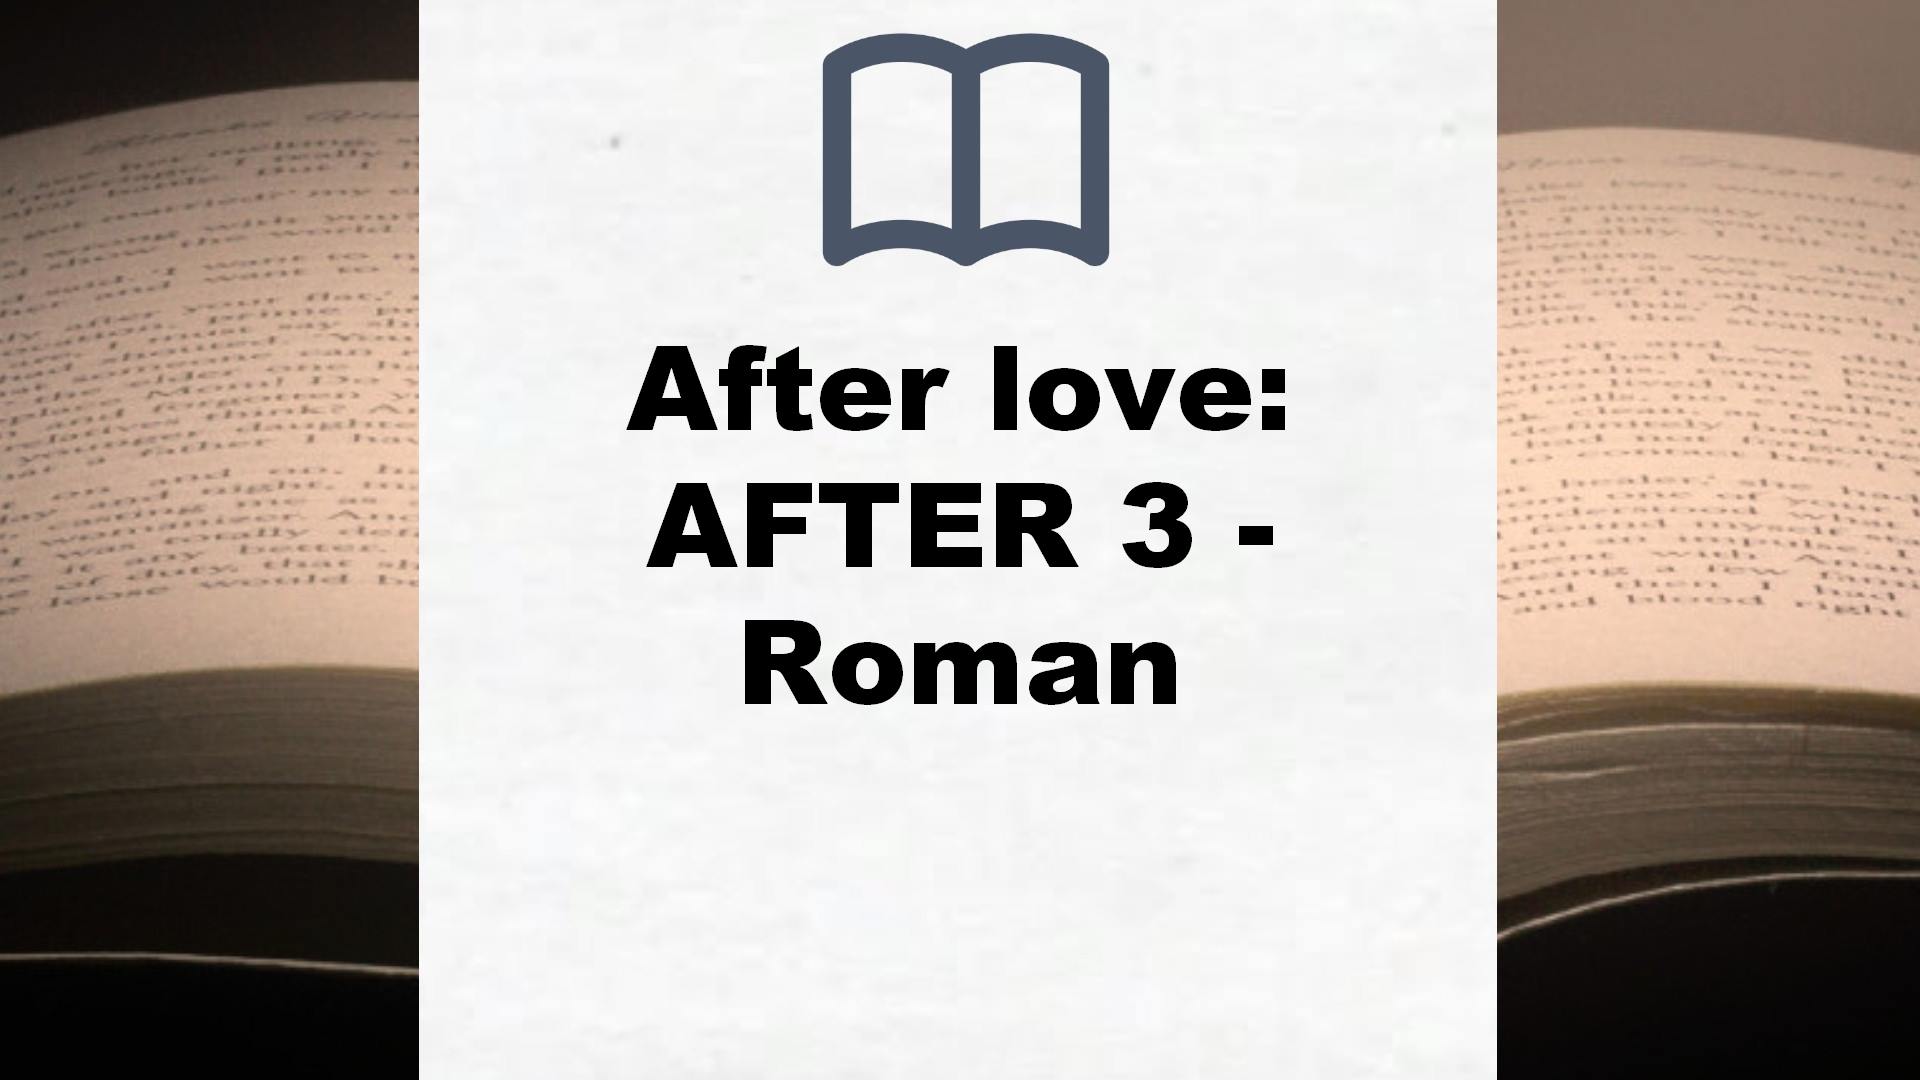 After love: AFTER 3 – Roman – Buchrezension